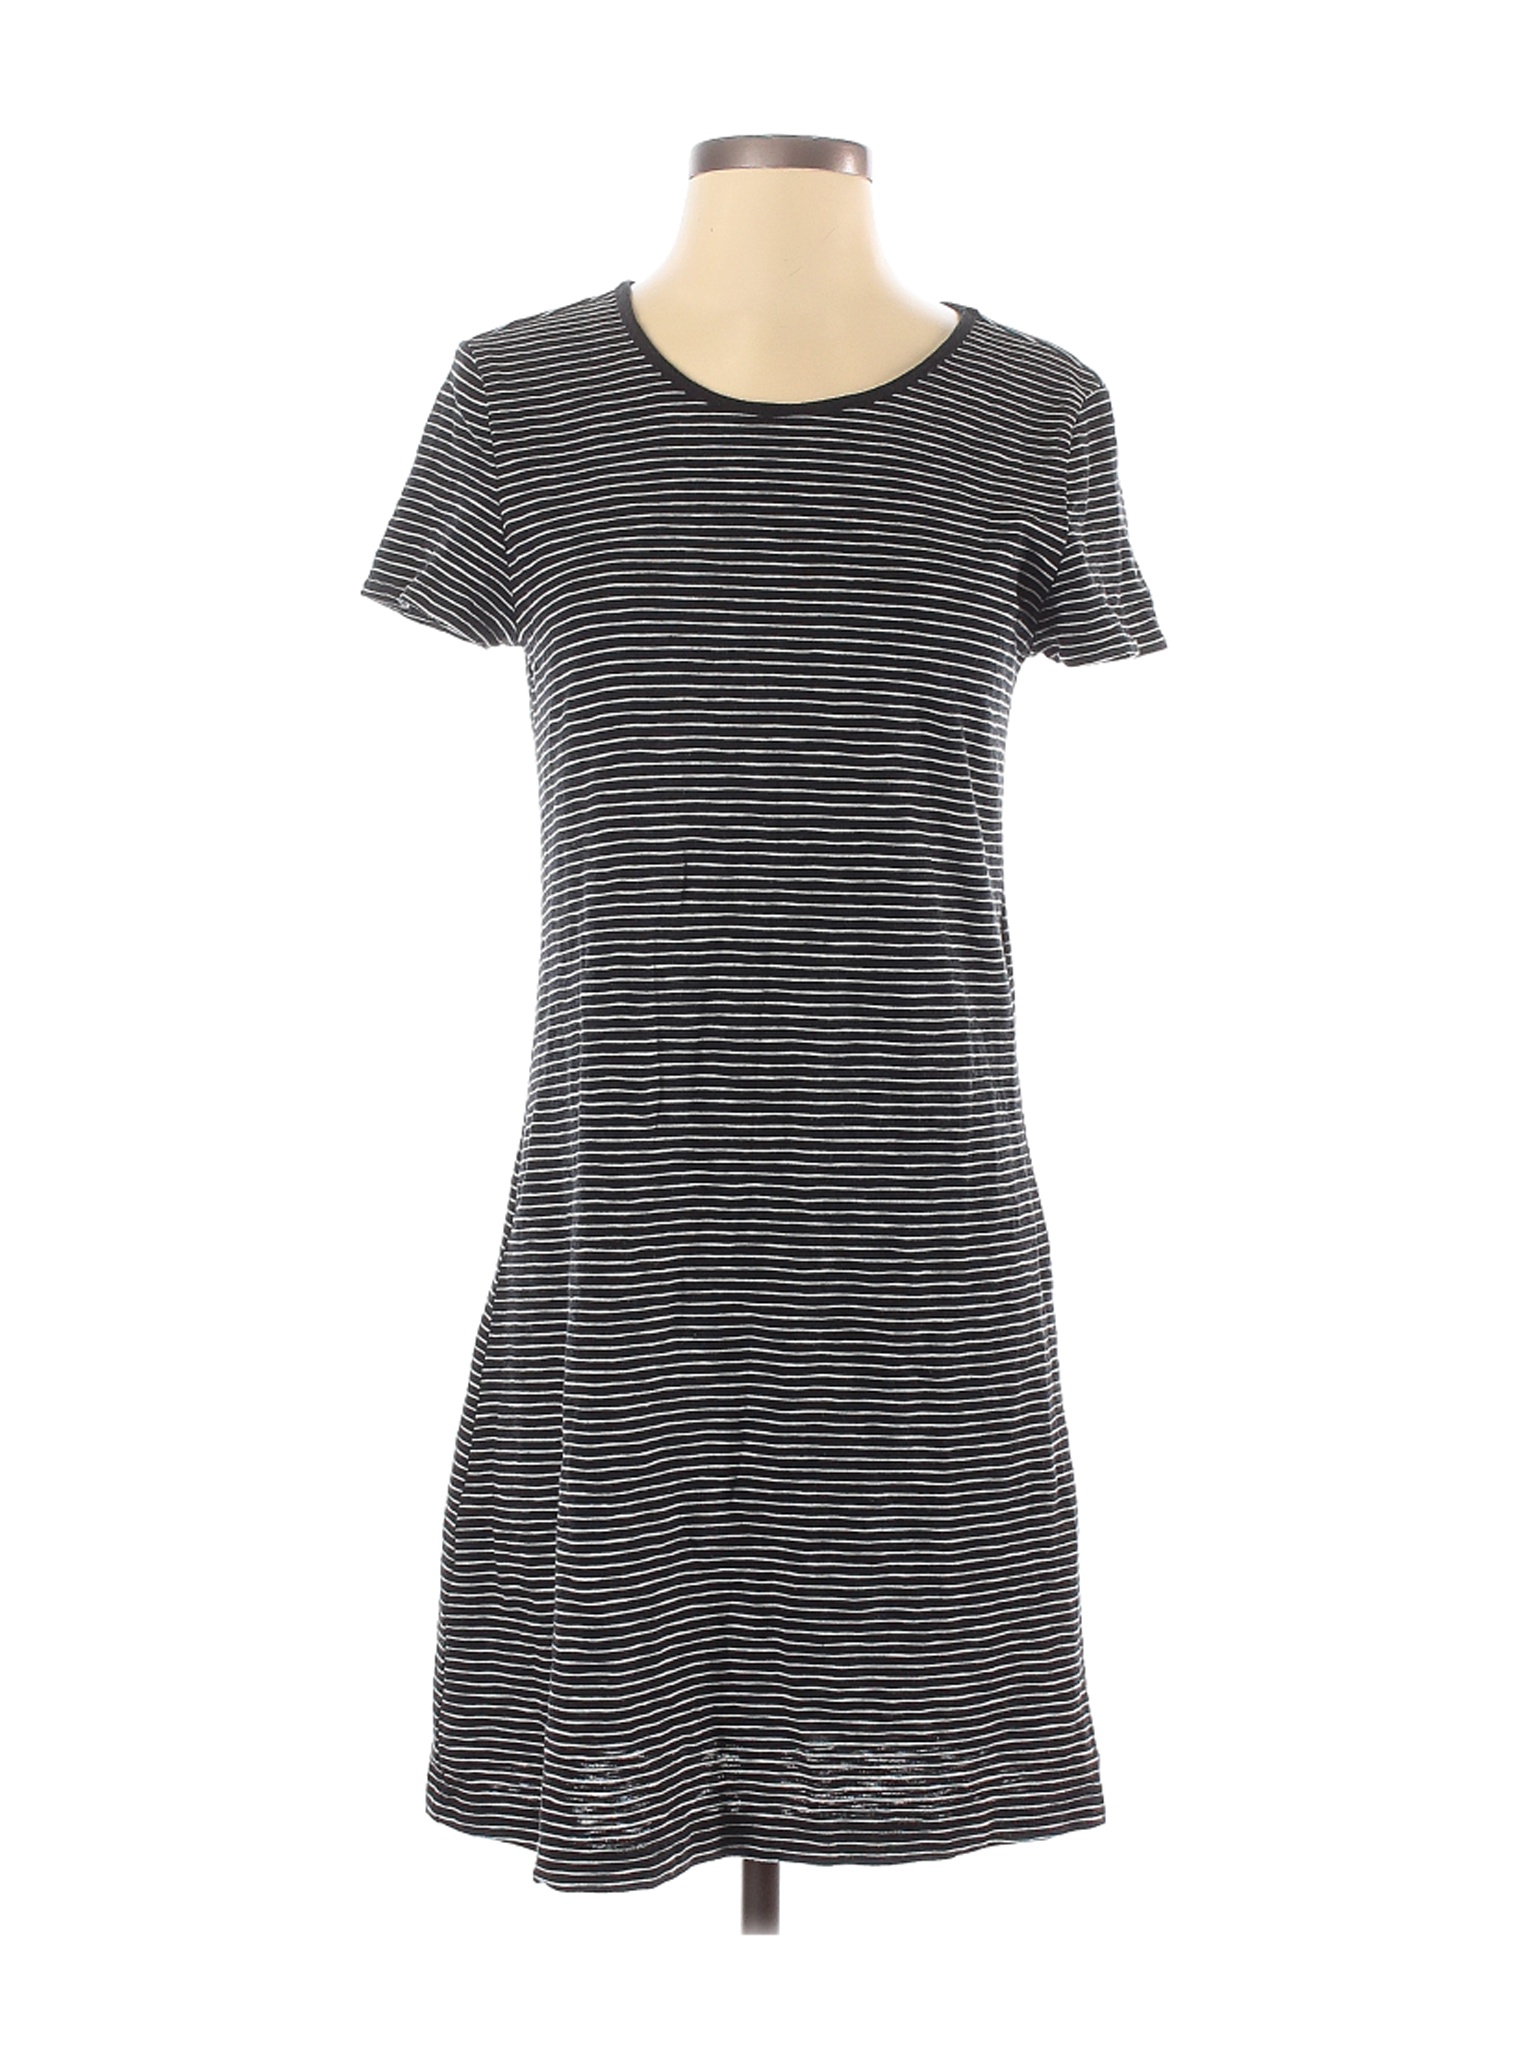 Gap Outlet Women Black Casual Dress XS | eBay